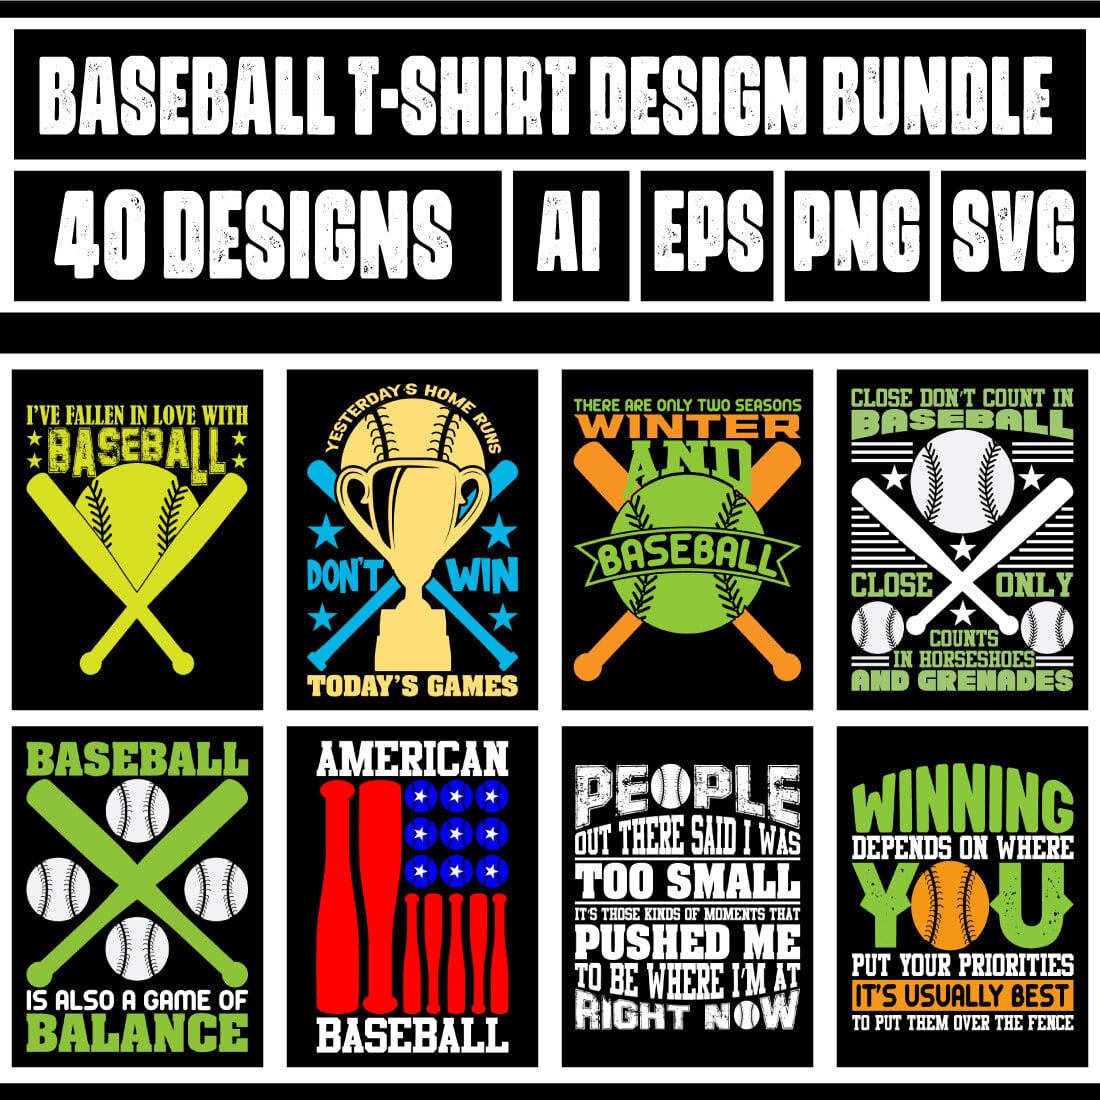 Baseball T-Shirt Design Bundle main cover